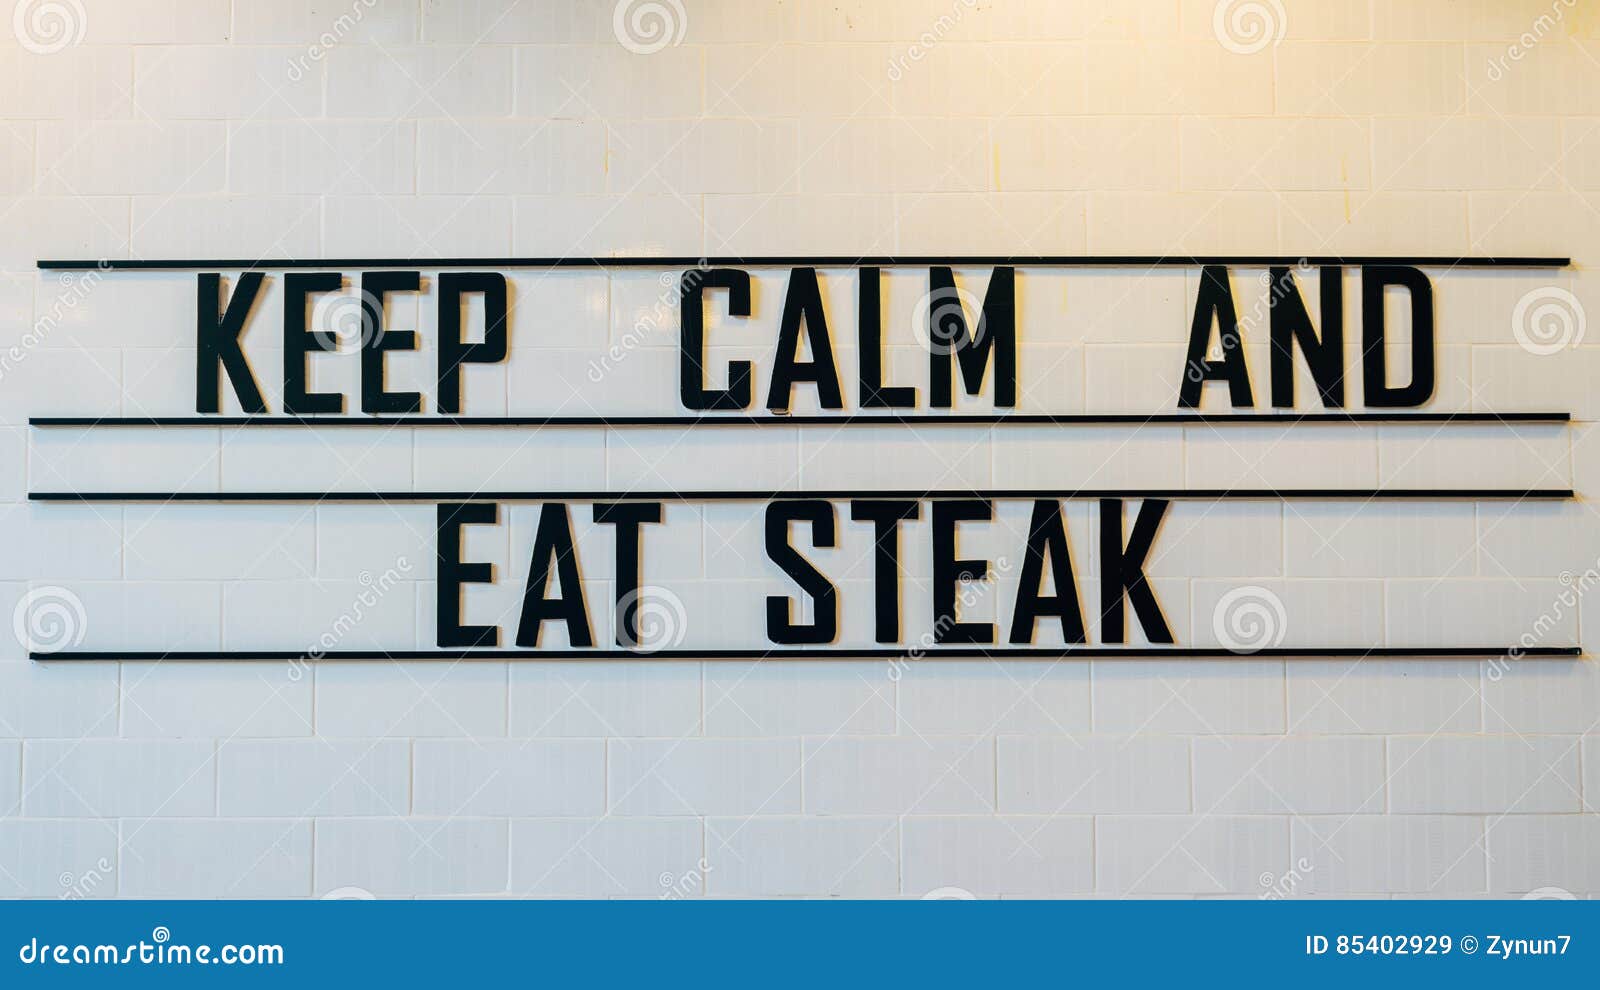 keep-calm-eat-steak-sign-restaurant-85402929.jpg